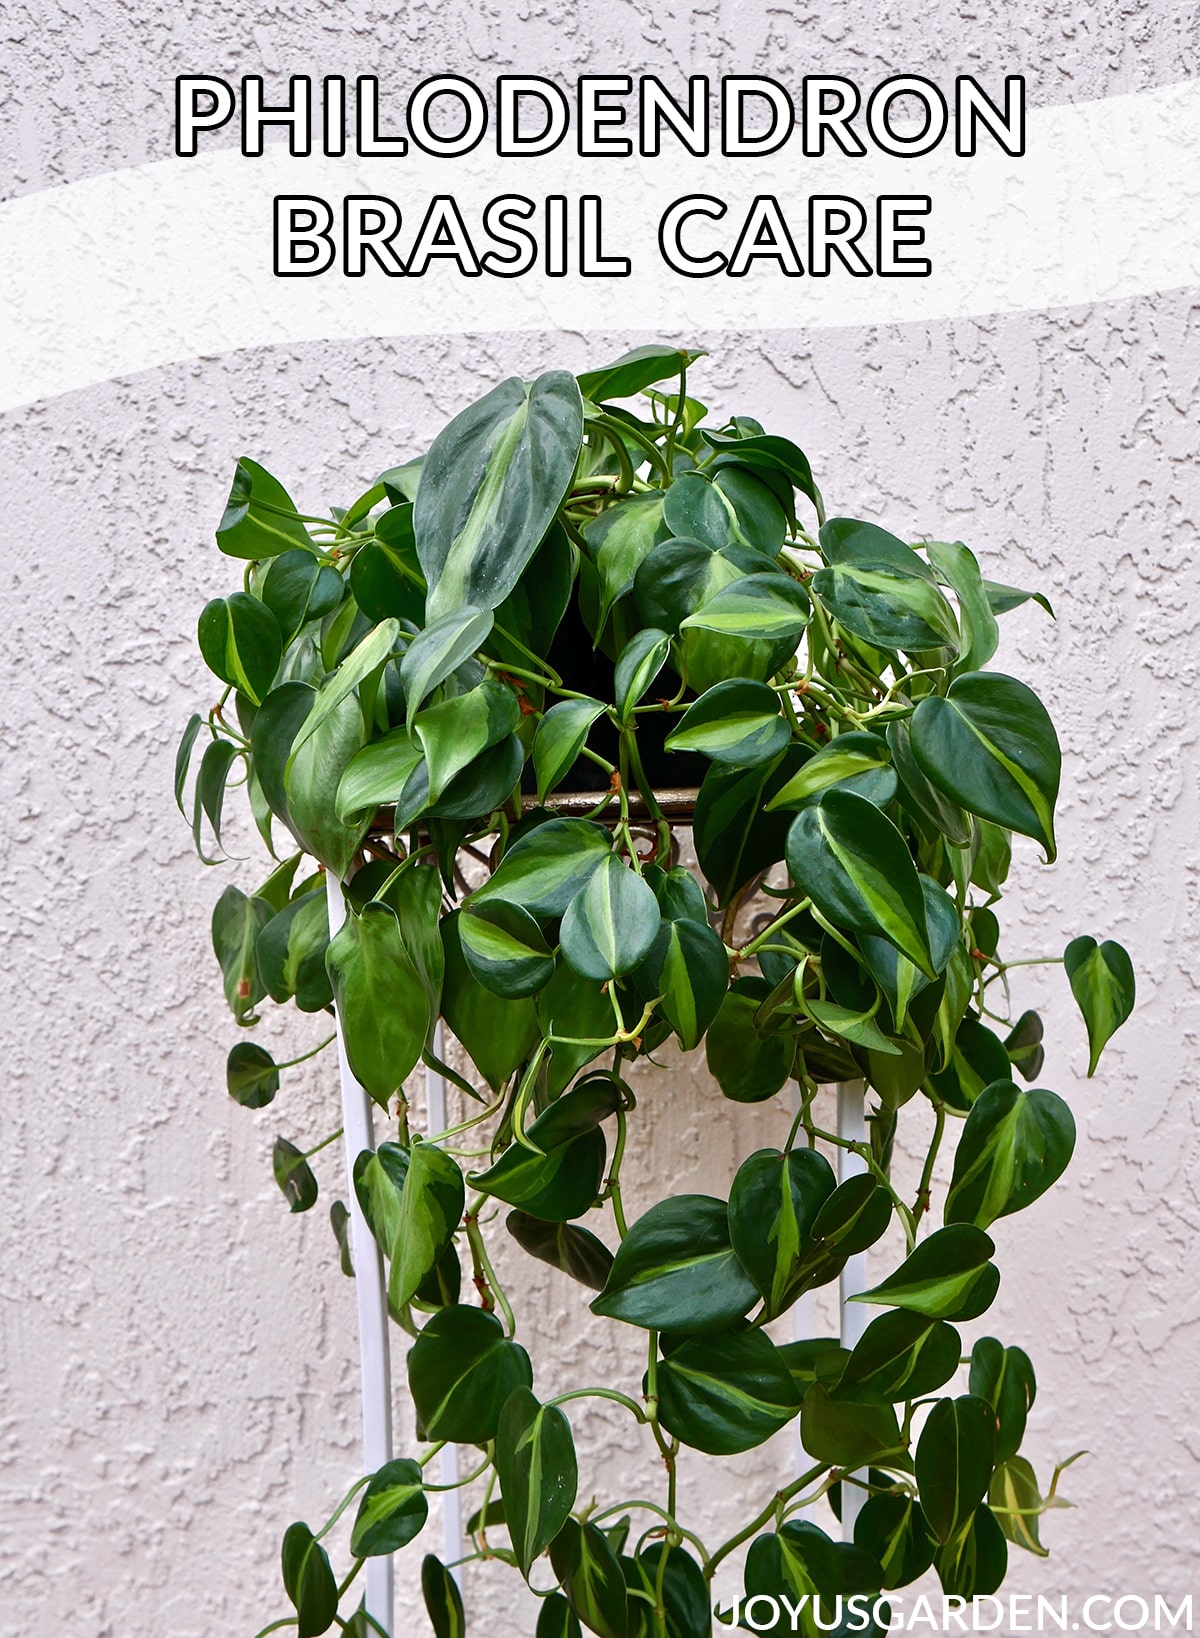  Philodendron Brasil Pleje: En nem, slyngende stueplante